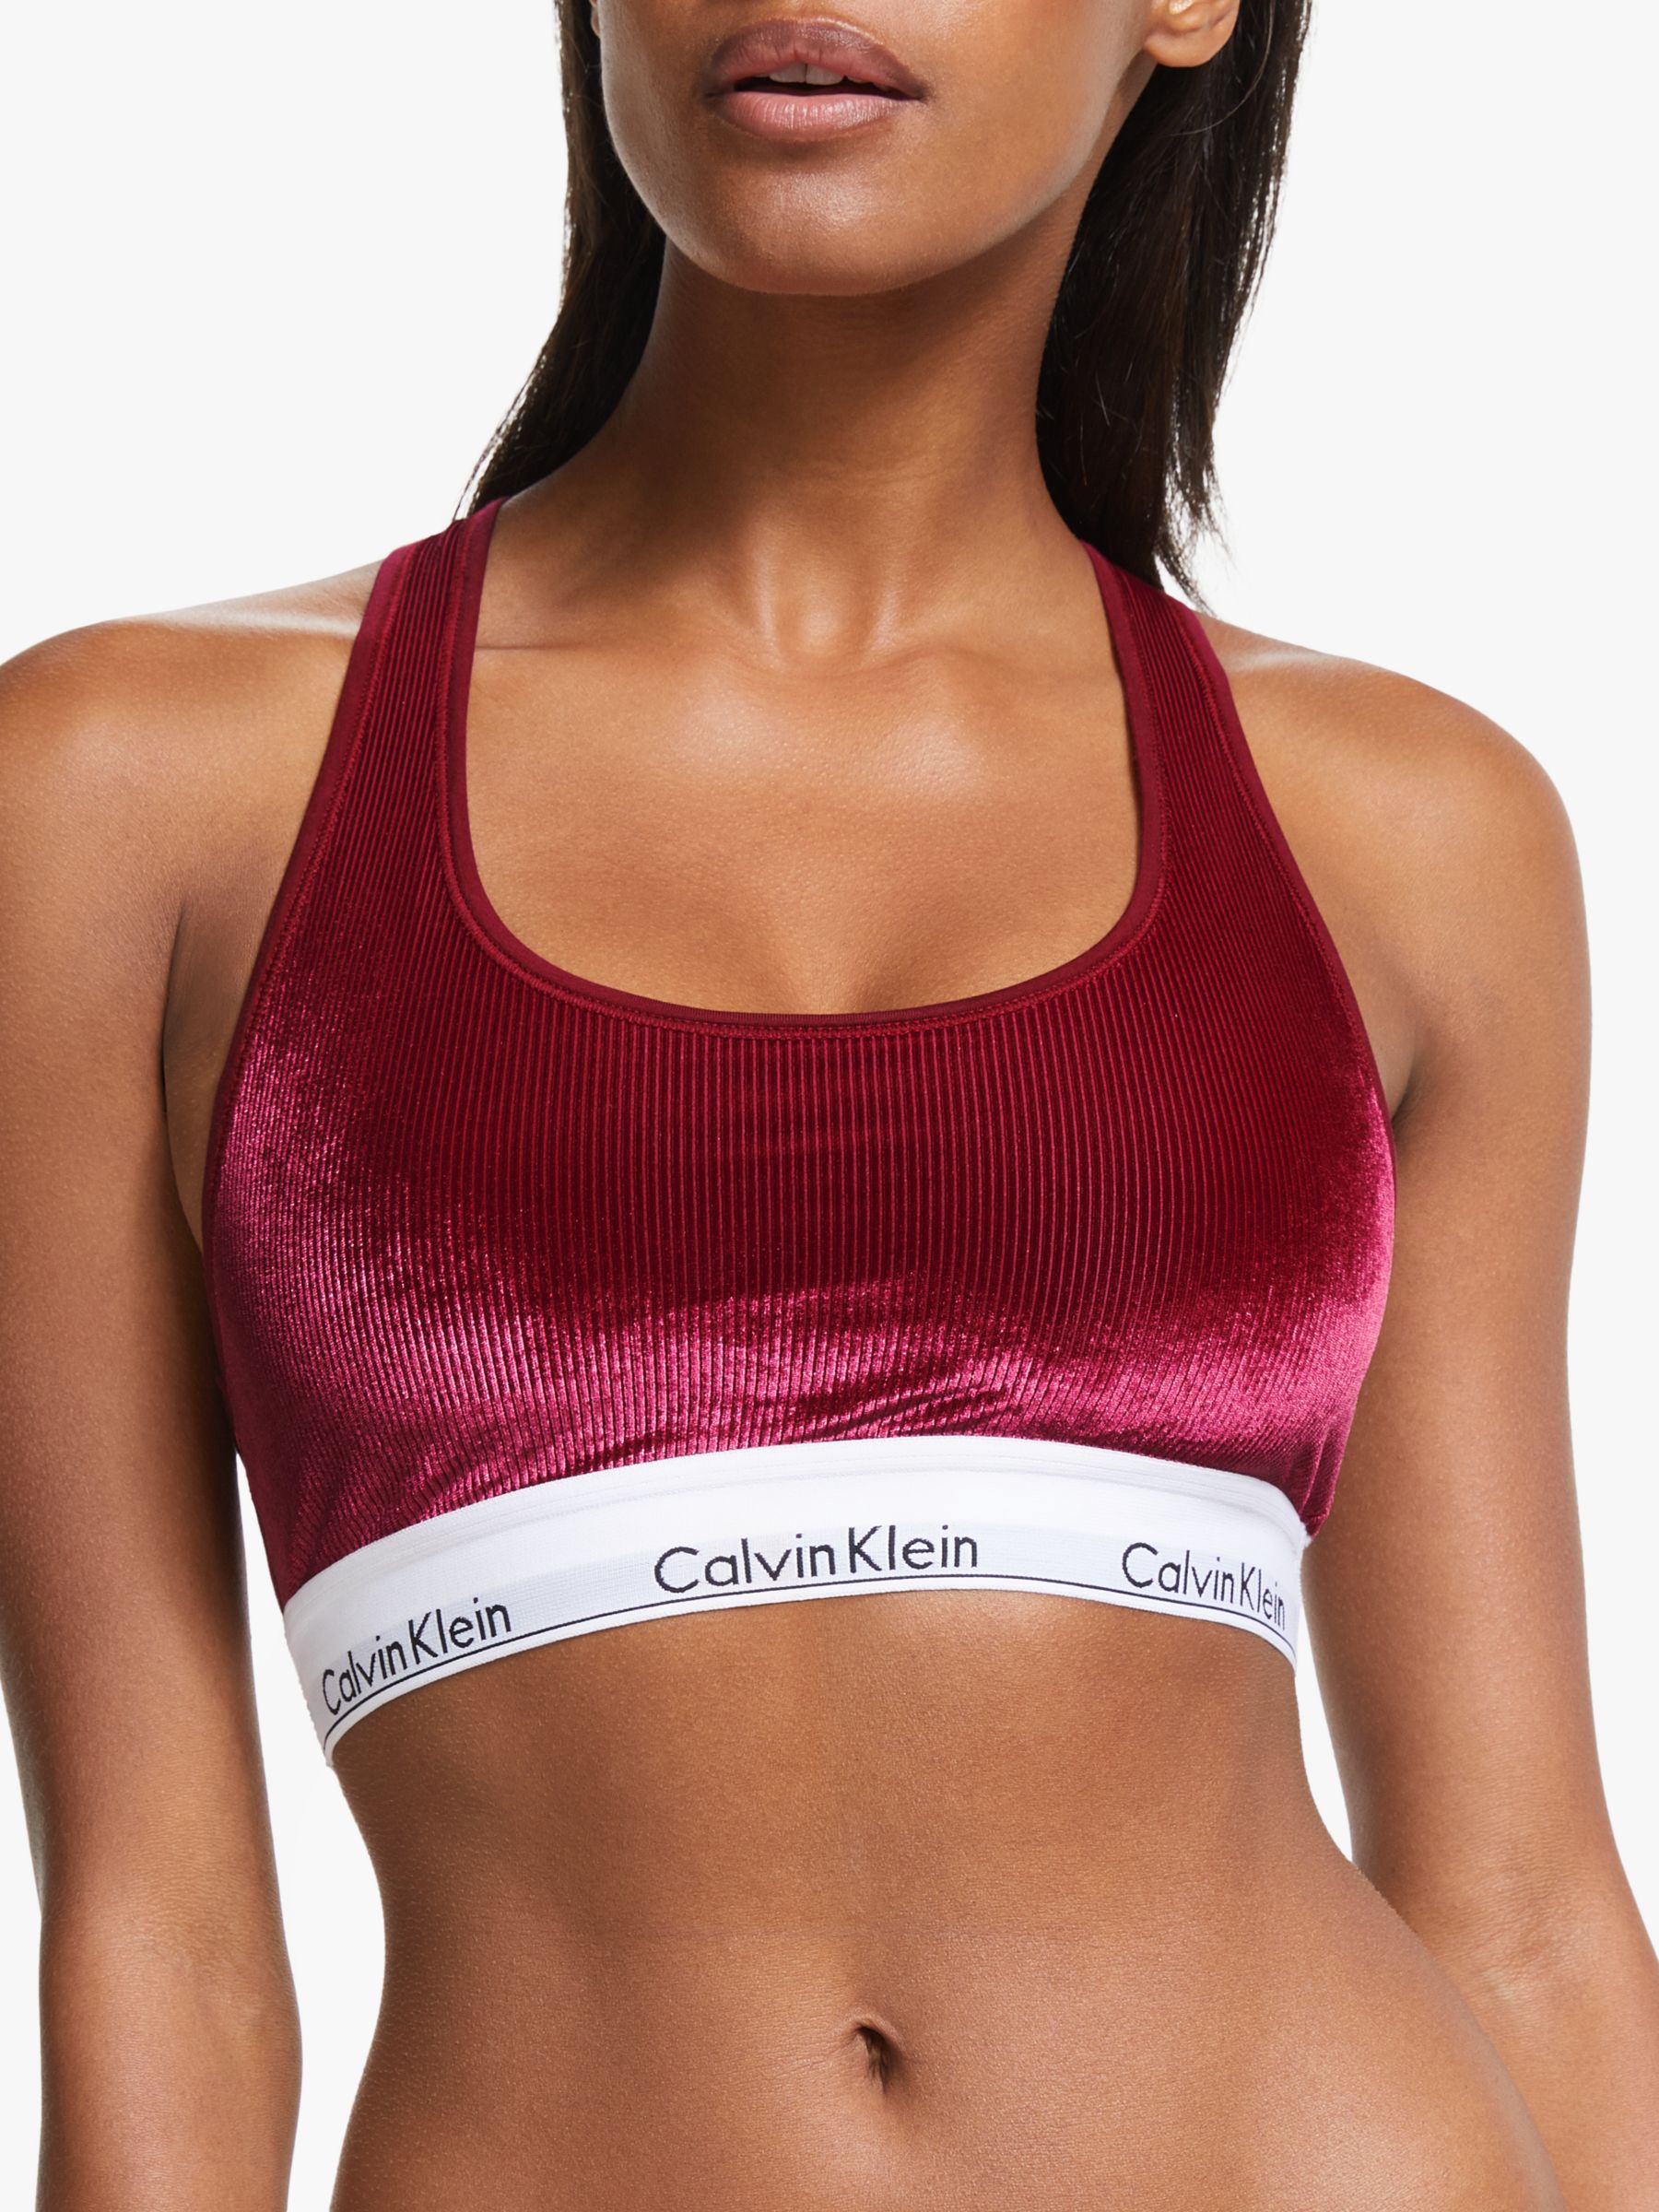 Calvin Klein L Sports Bras for sale